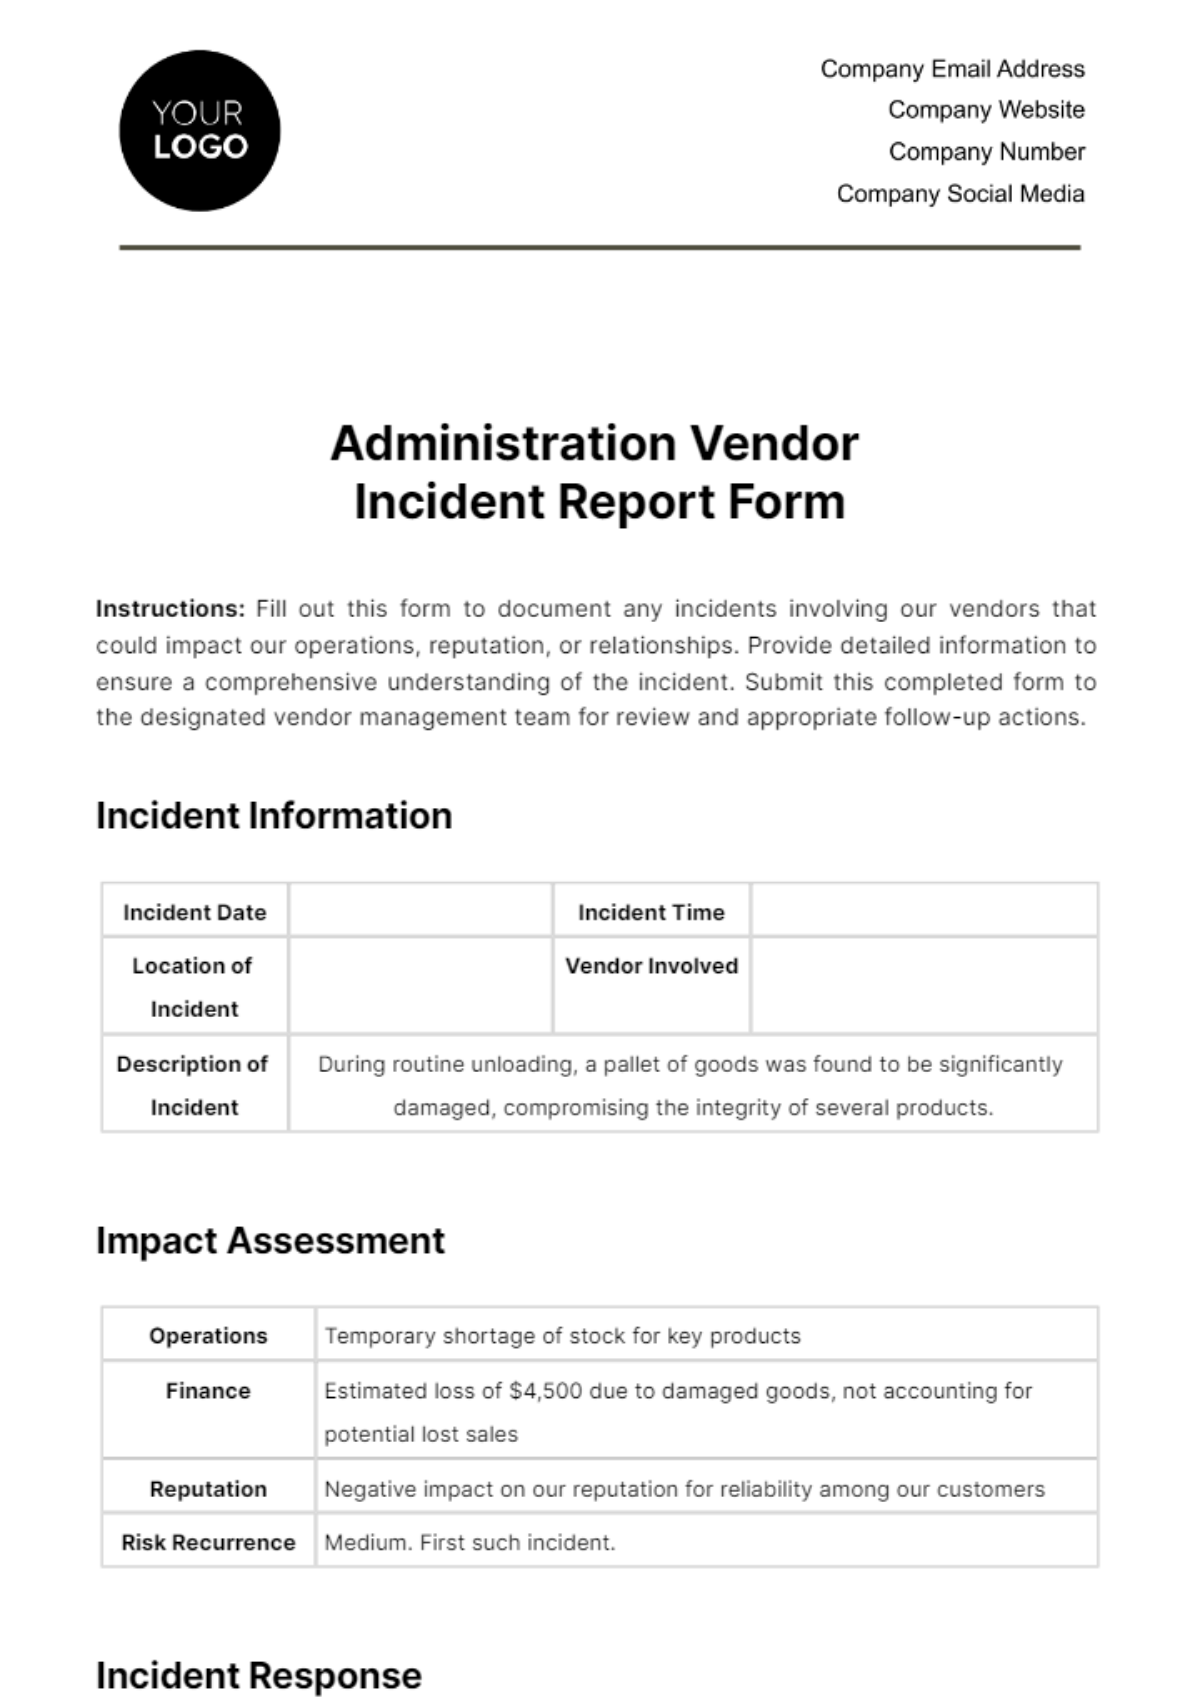 Administration Vendor Incident Report Form Template